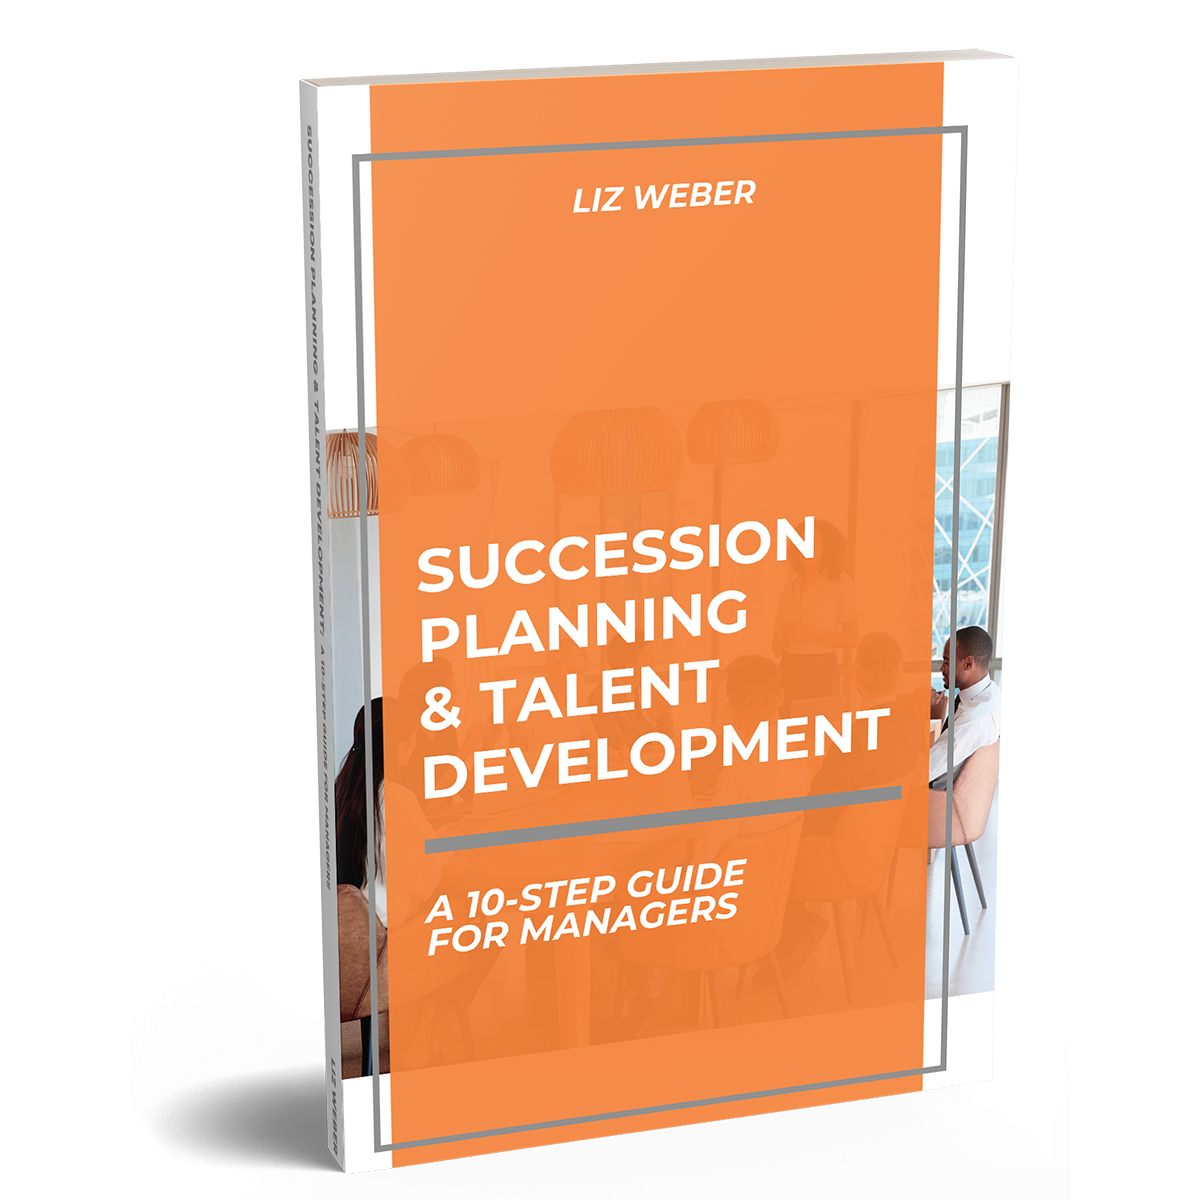 Succession Planning & Talent Development